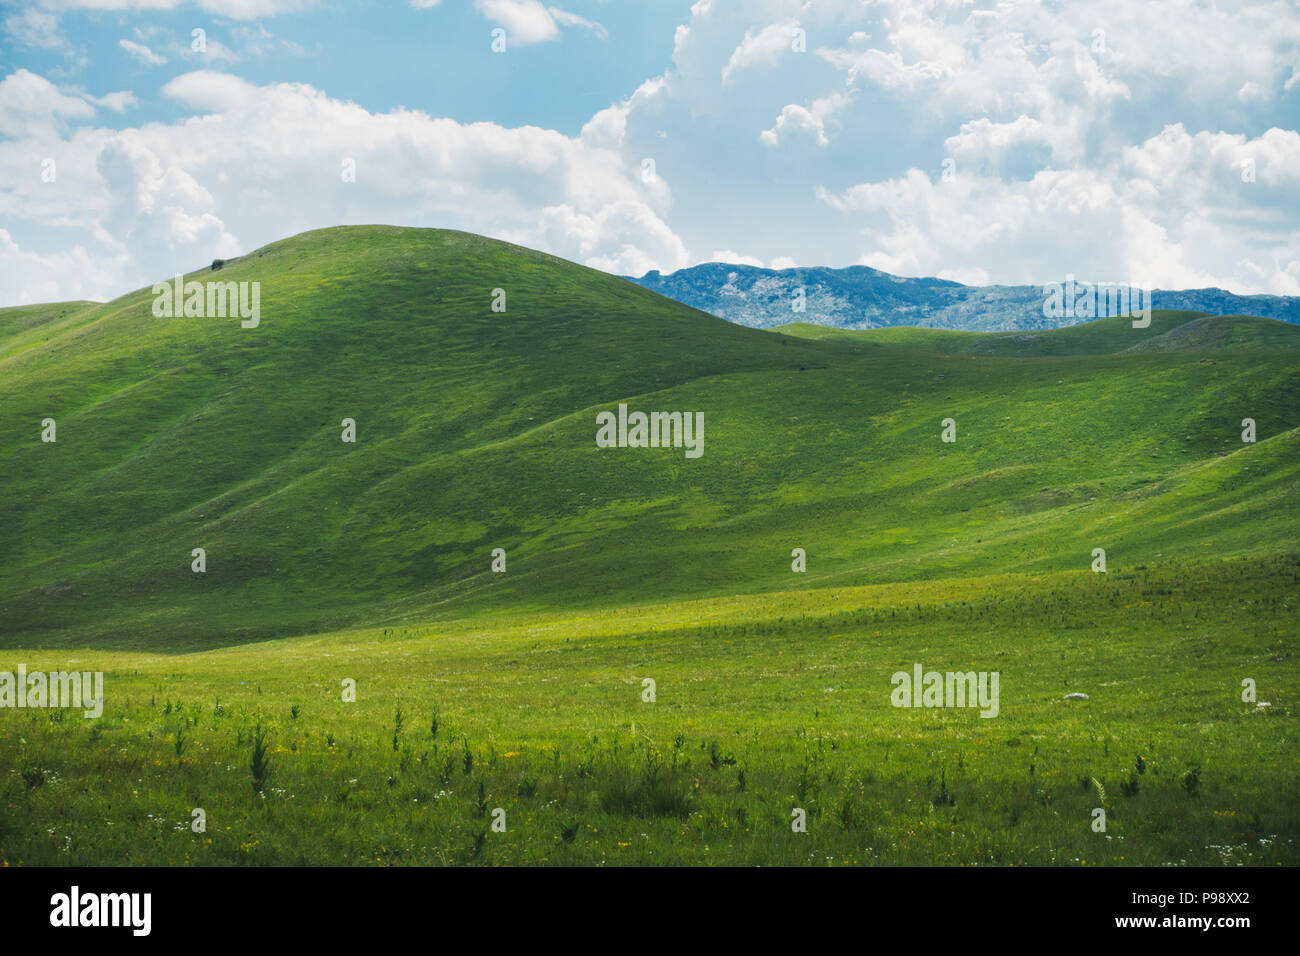 Microsoft Windows XP Starter Edition wallpaper by pandomperson on DeviantArt